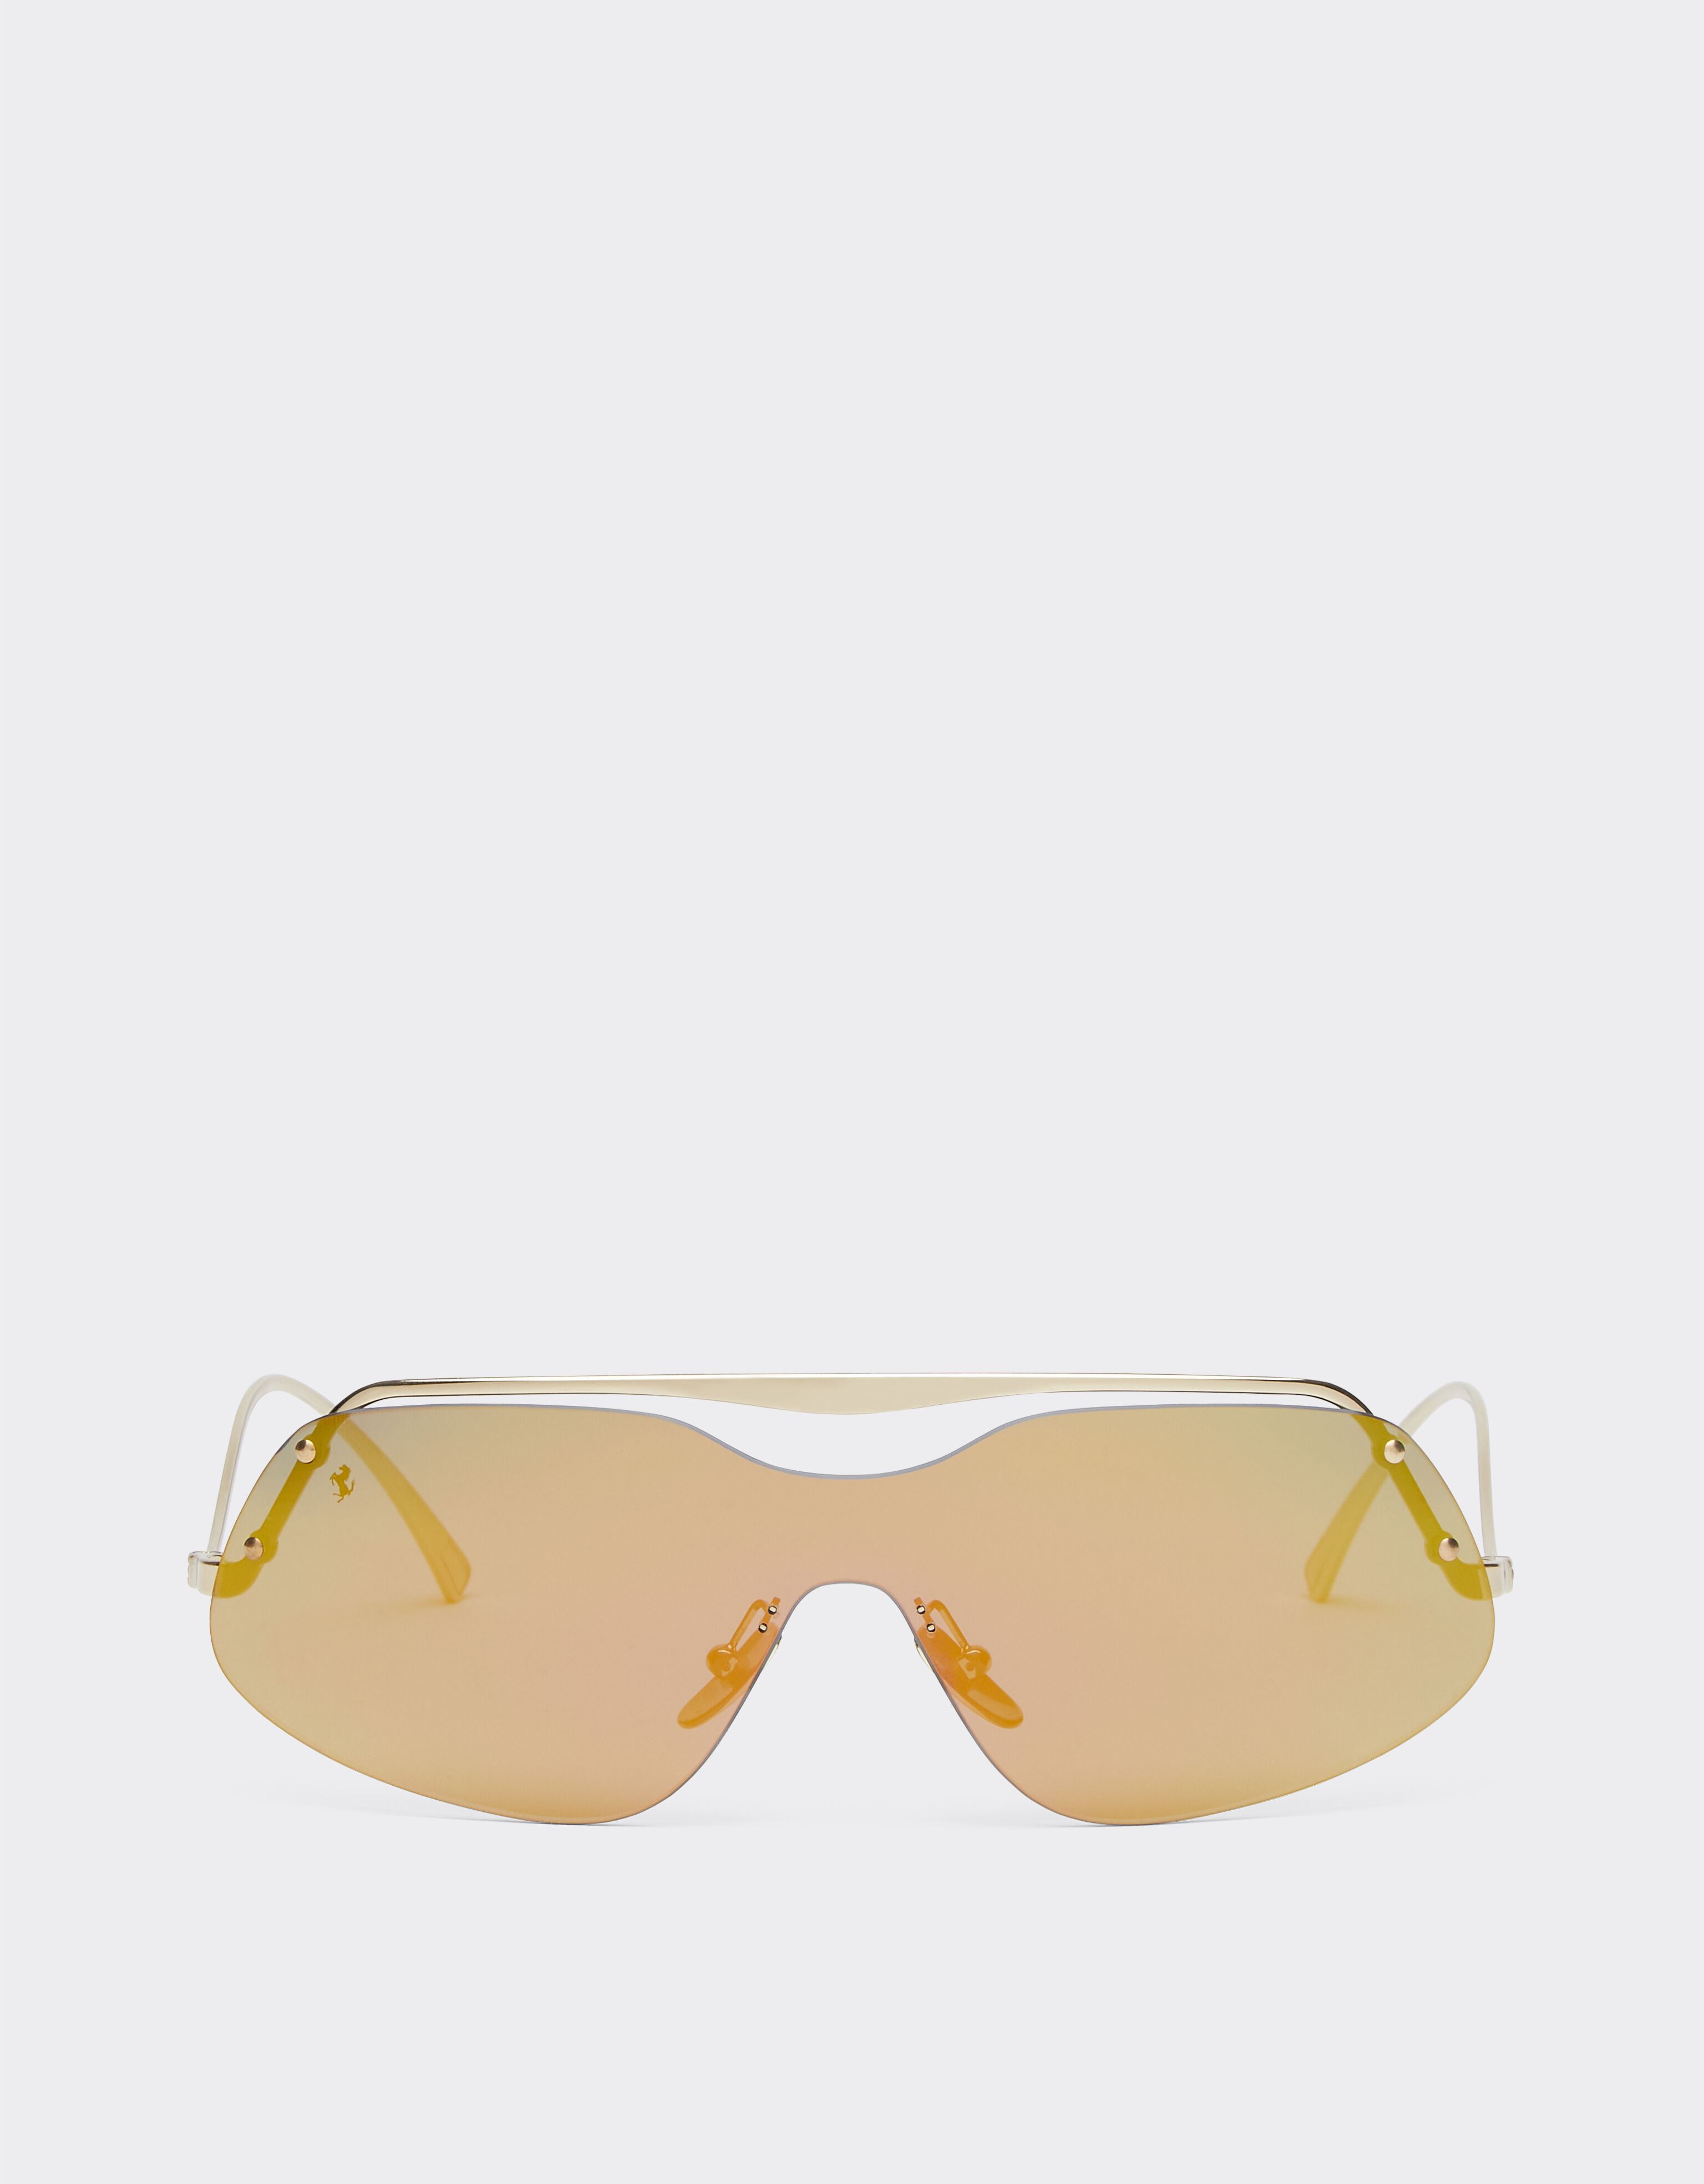 Ferrari Ferrari sunglasses in gold-tone metal with blue mirror gold lenses Gold F1200f